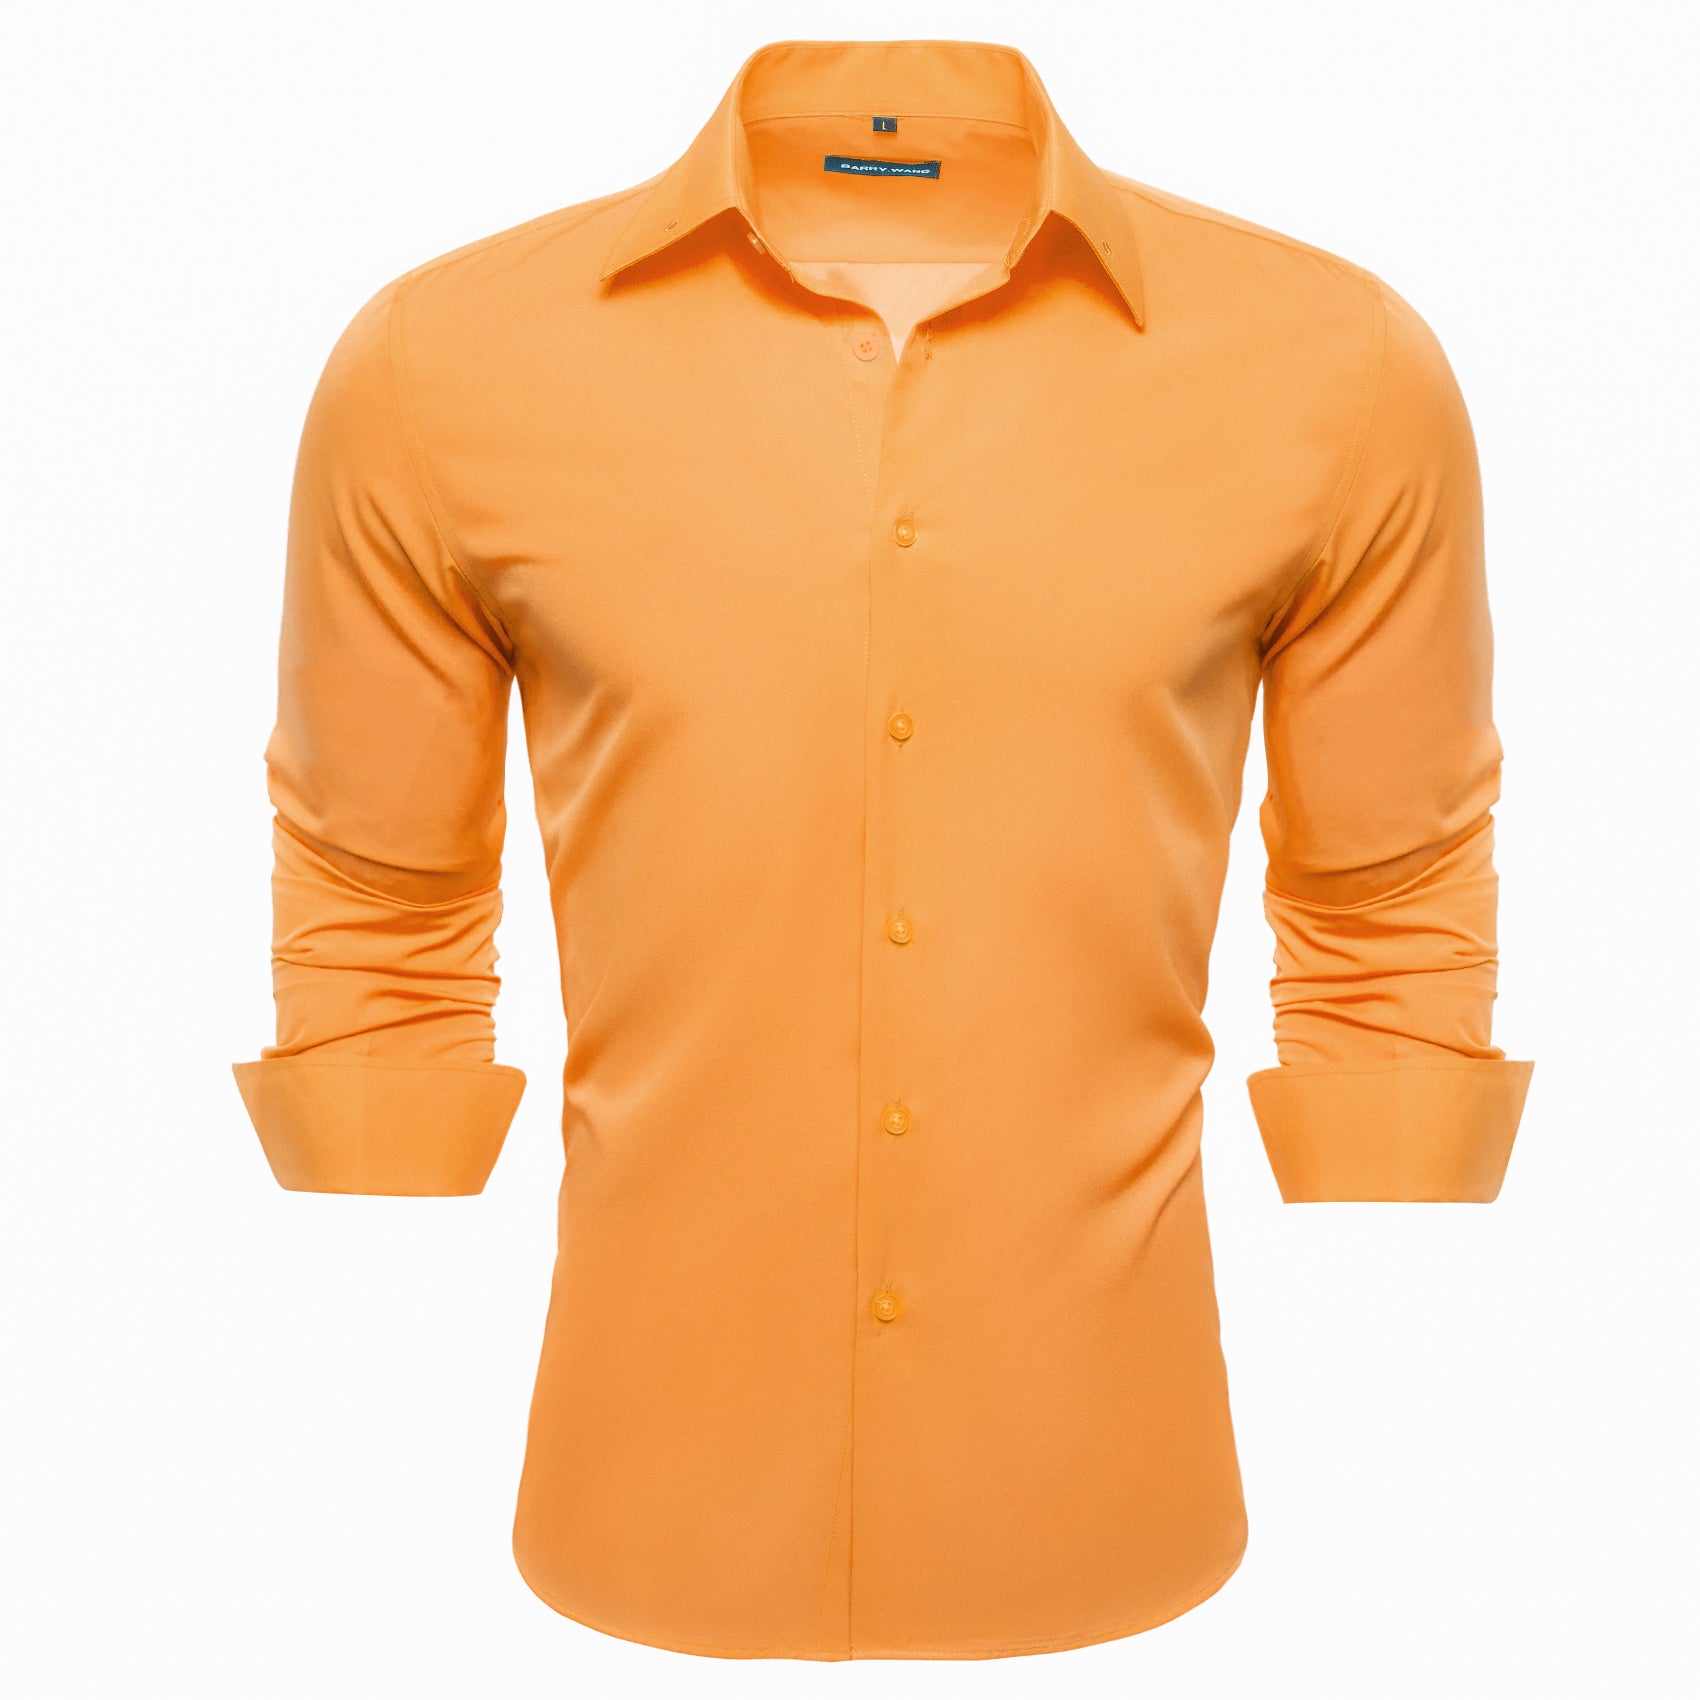 Barry.wang Dark Orange Solid Silk Shirt with Collar Pin